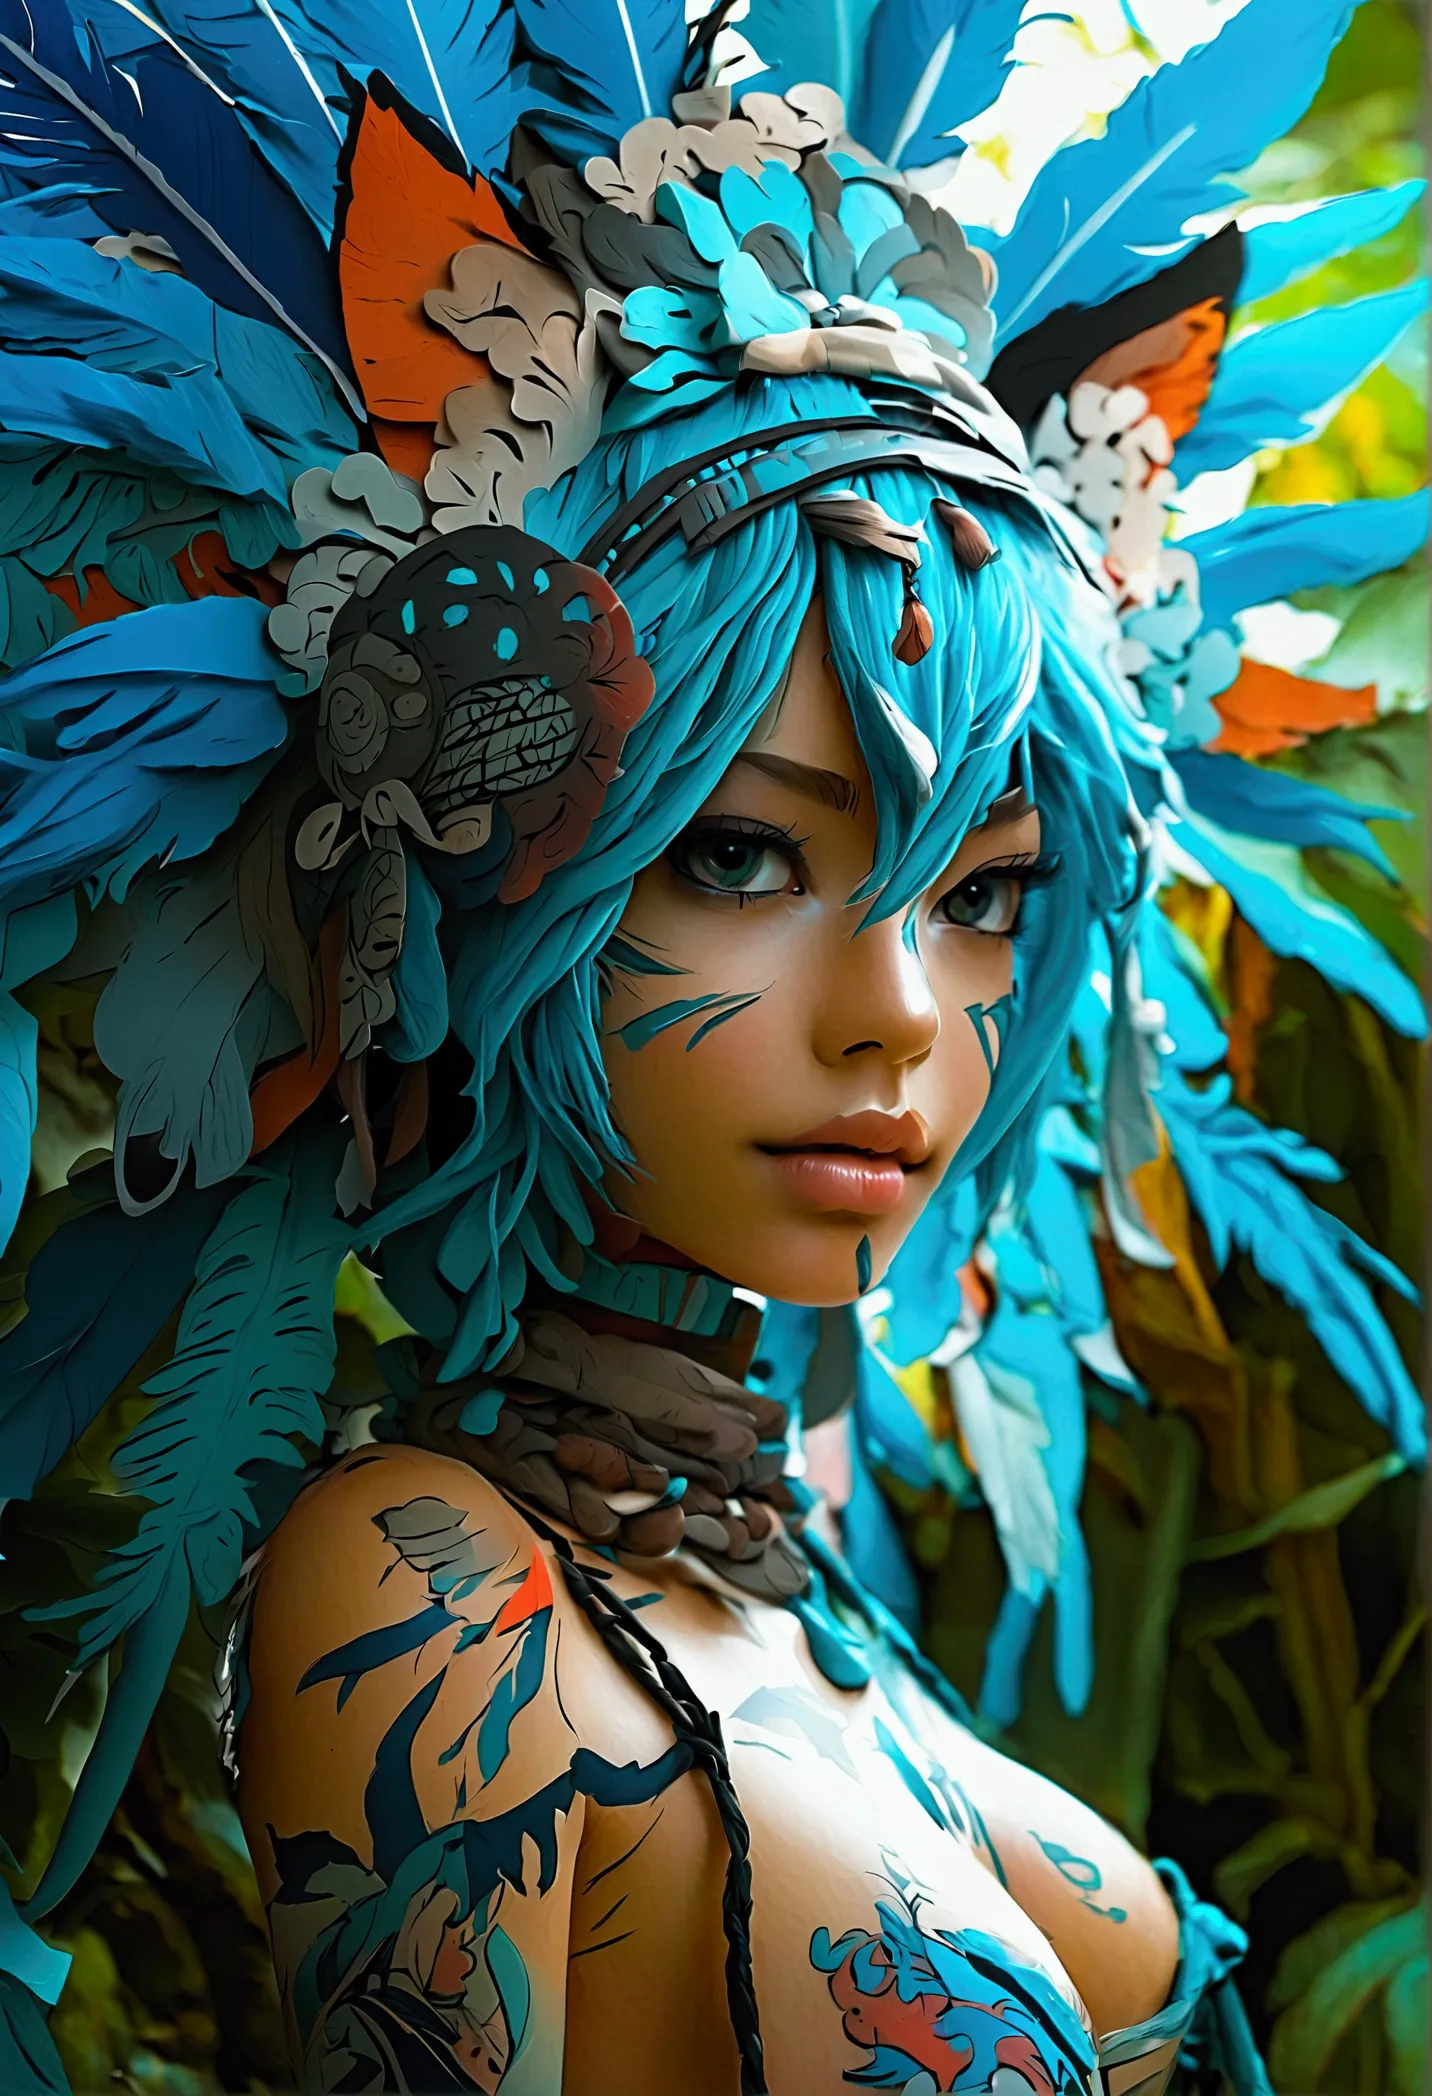 Miku Hatsune, add high definition add_detail:1, blue fur,kitsune ears, tribal tattoo add_detail:1, in ruins in the jungle, baref...